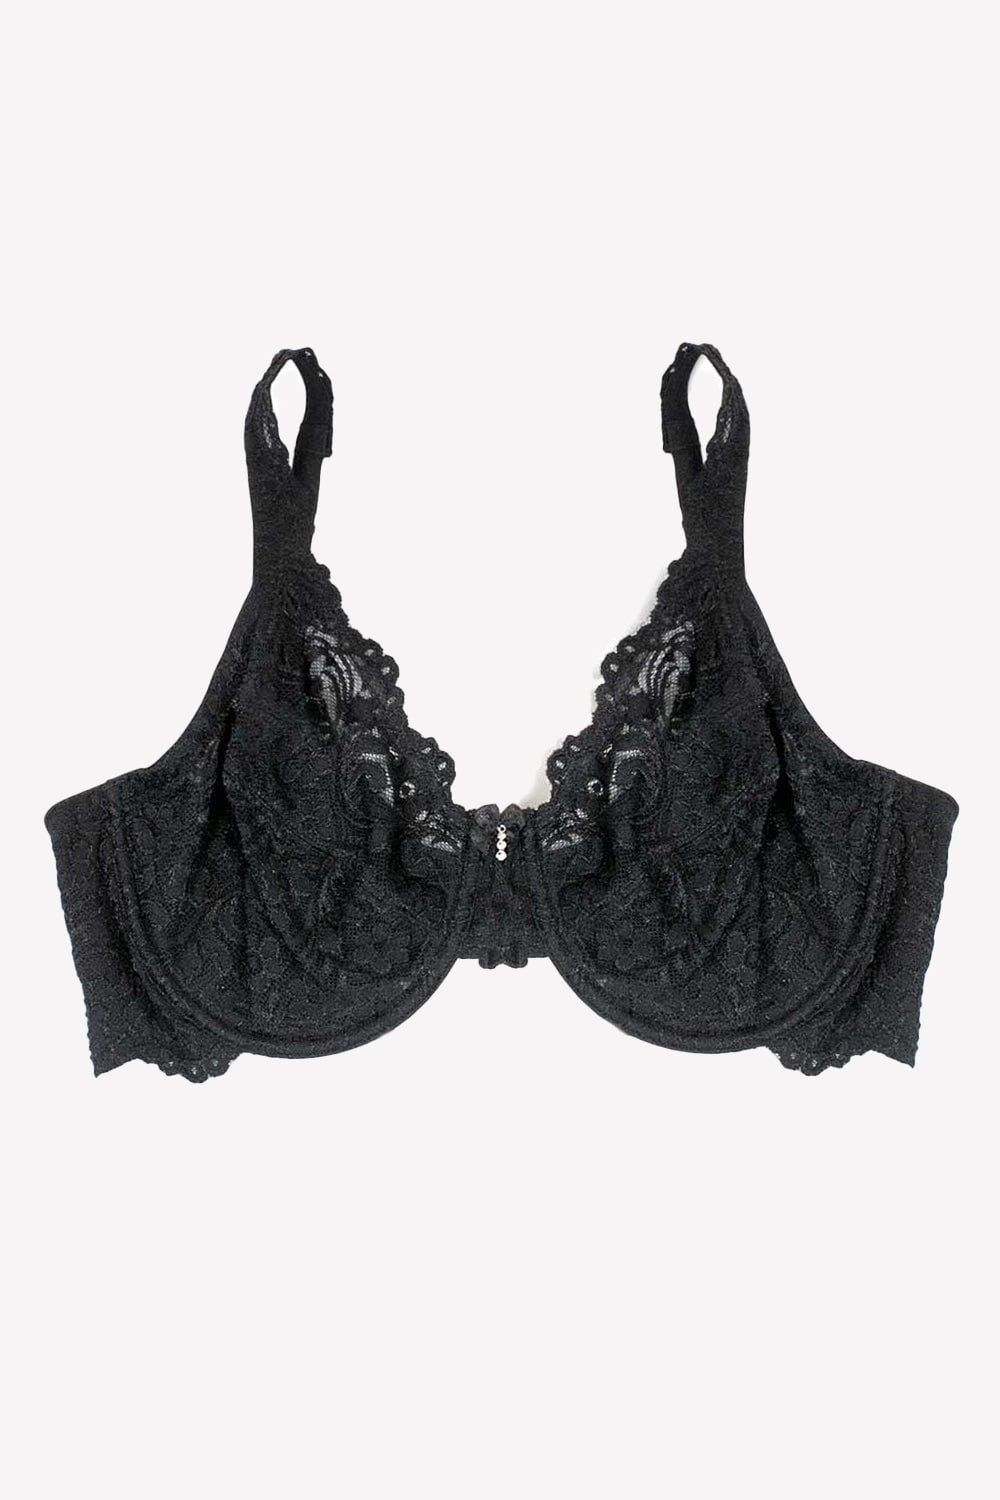 427 Women's Plus Size Full Coverage Sexy Lace Unpadded Underwire Bras  Minimizer Everyday Bra Black - Black / 32DDD